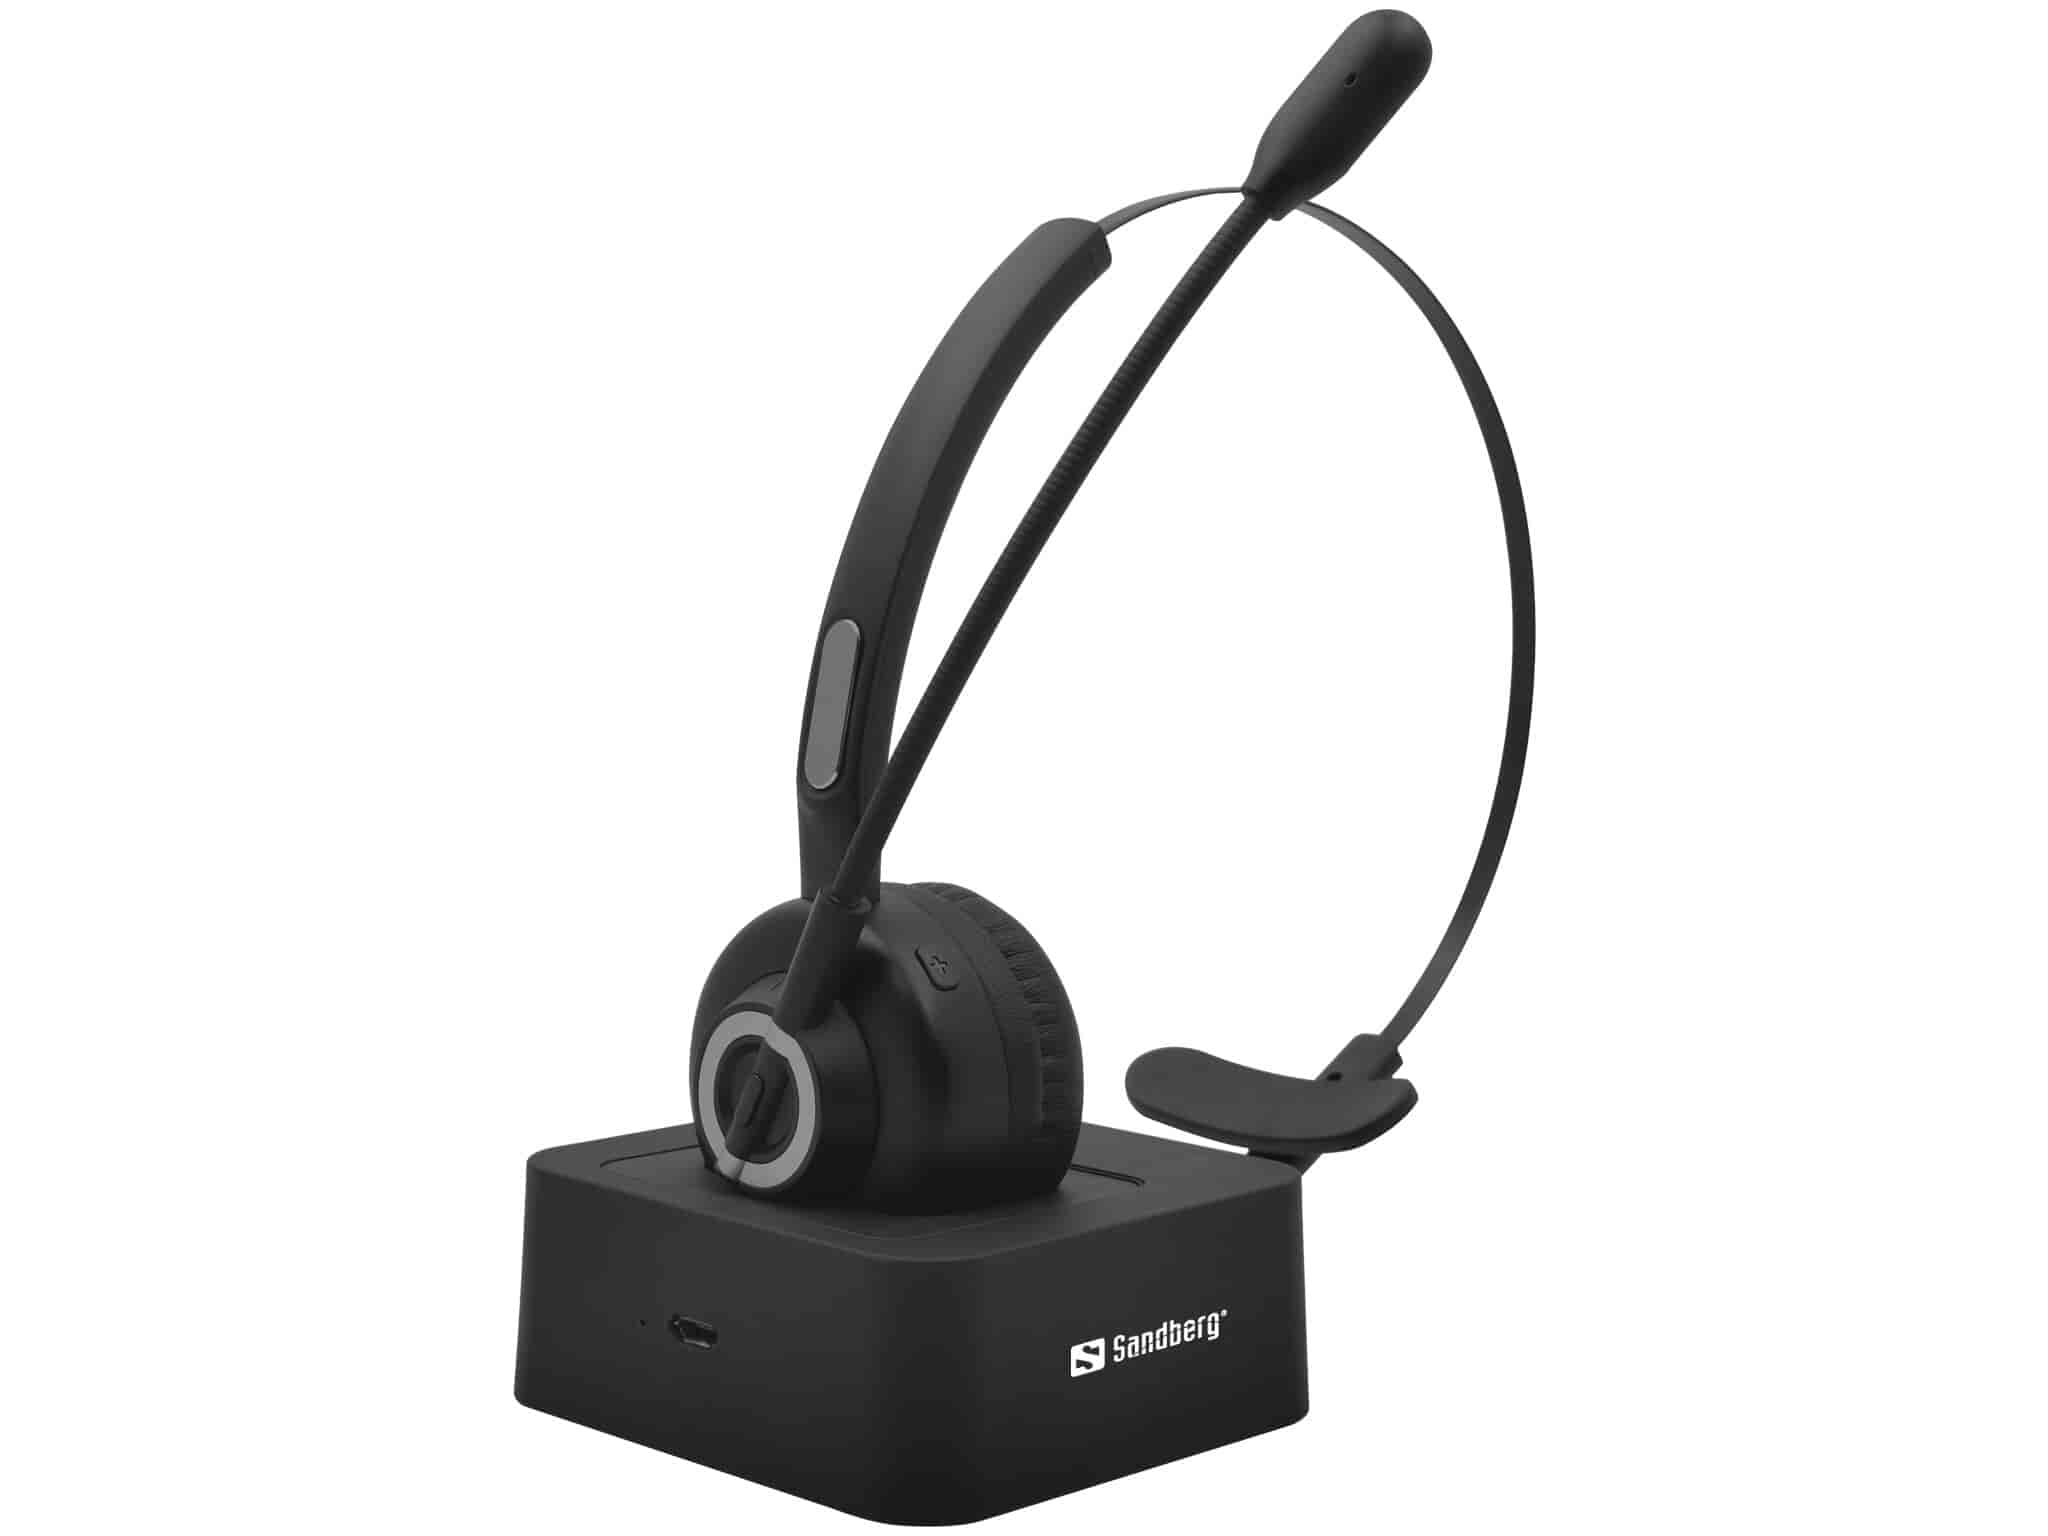 Bluetooth Office Headset Pro, suveræn lyd og 5 års garanti.